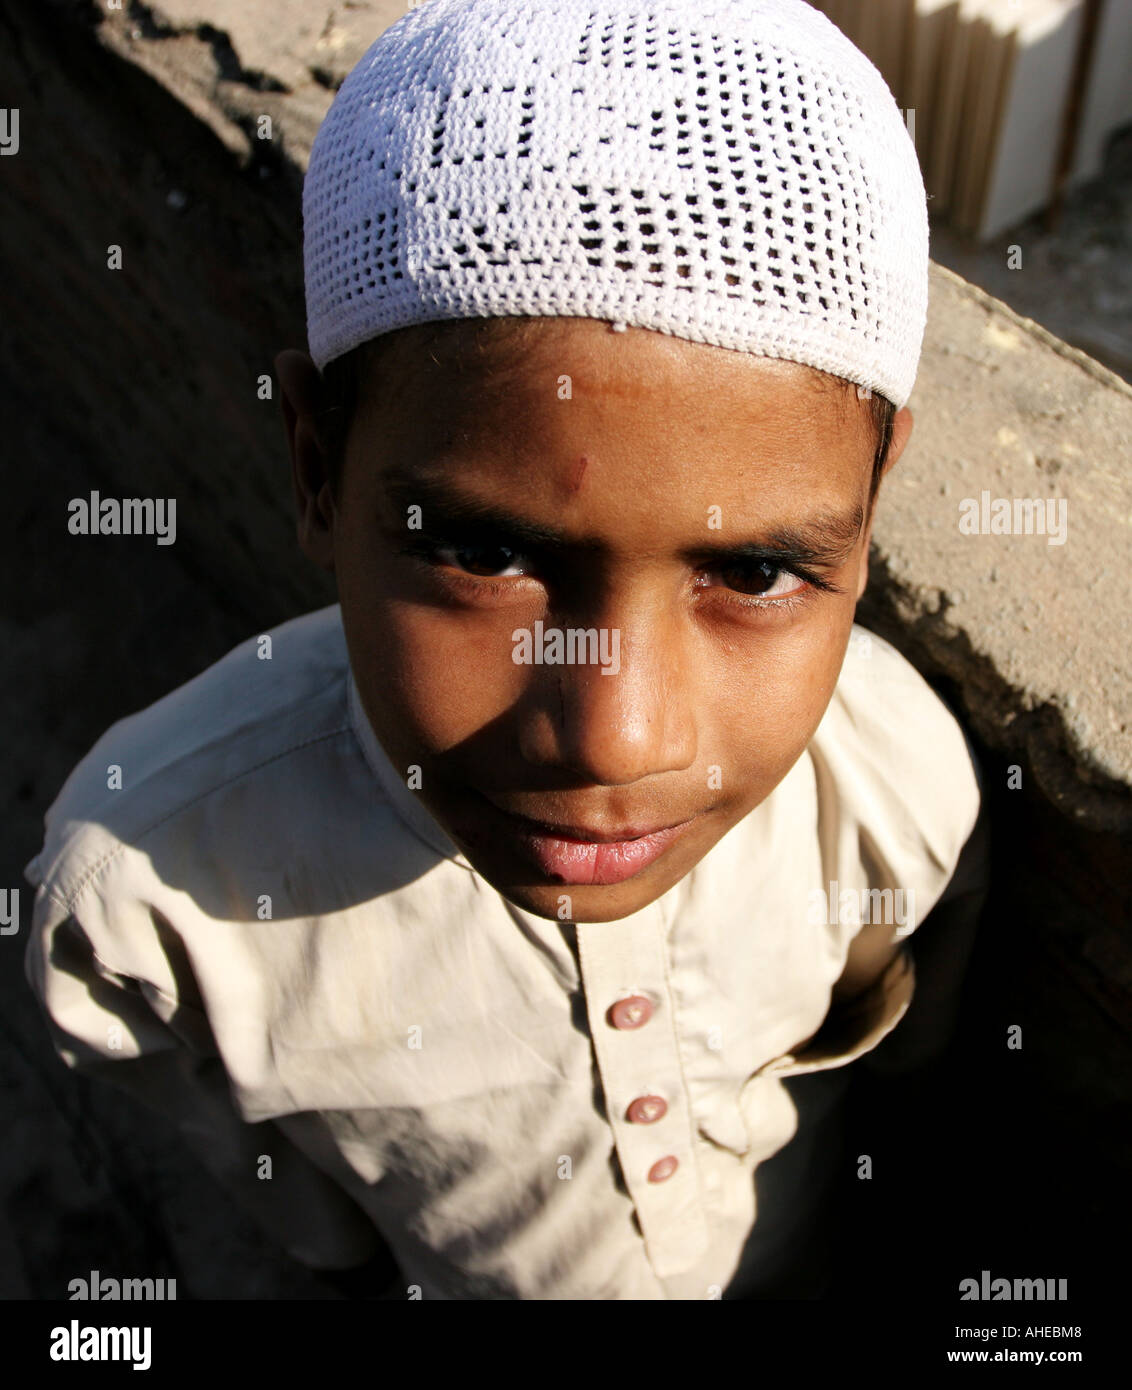 Muslim boy staring, India Stock Photo - Alamy